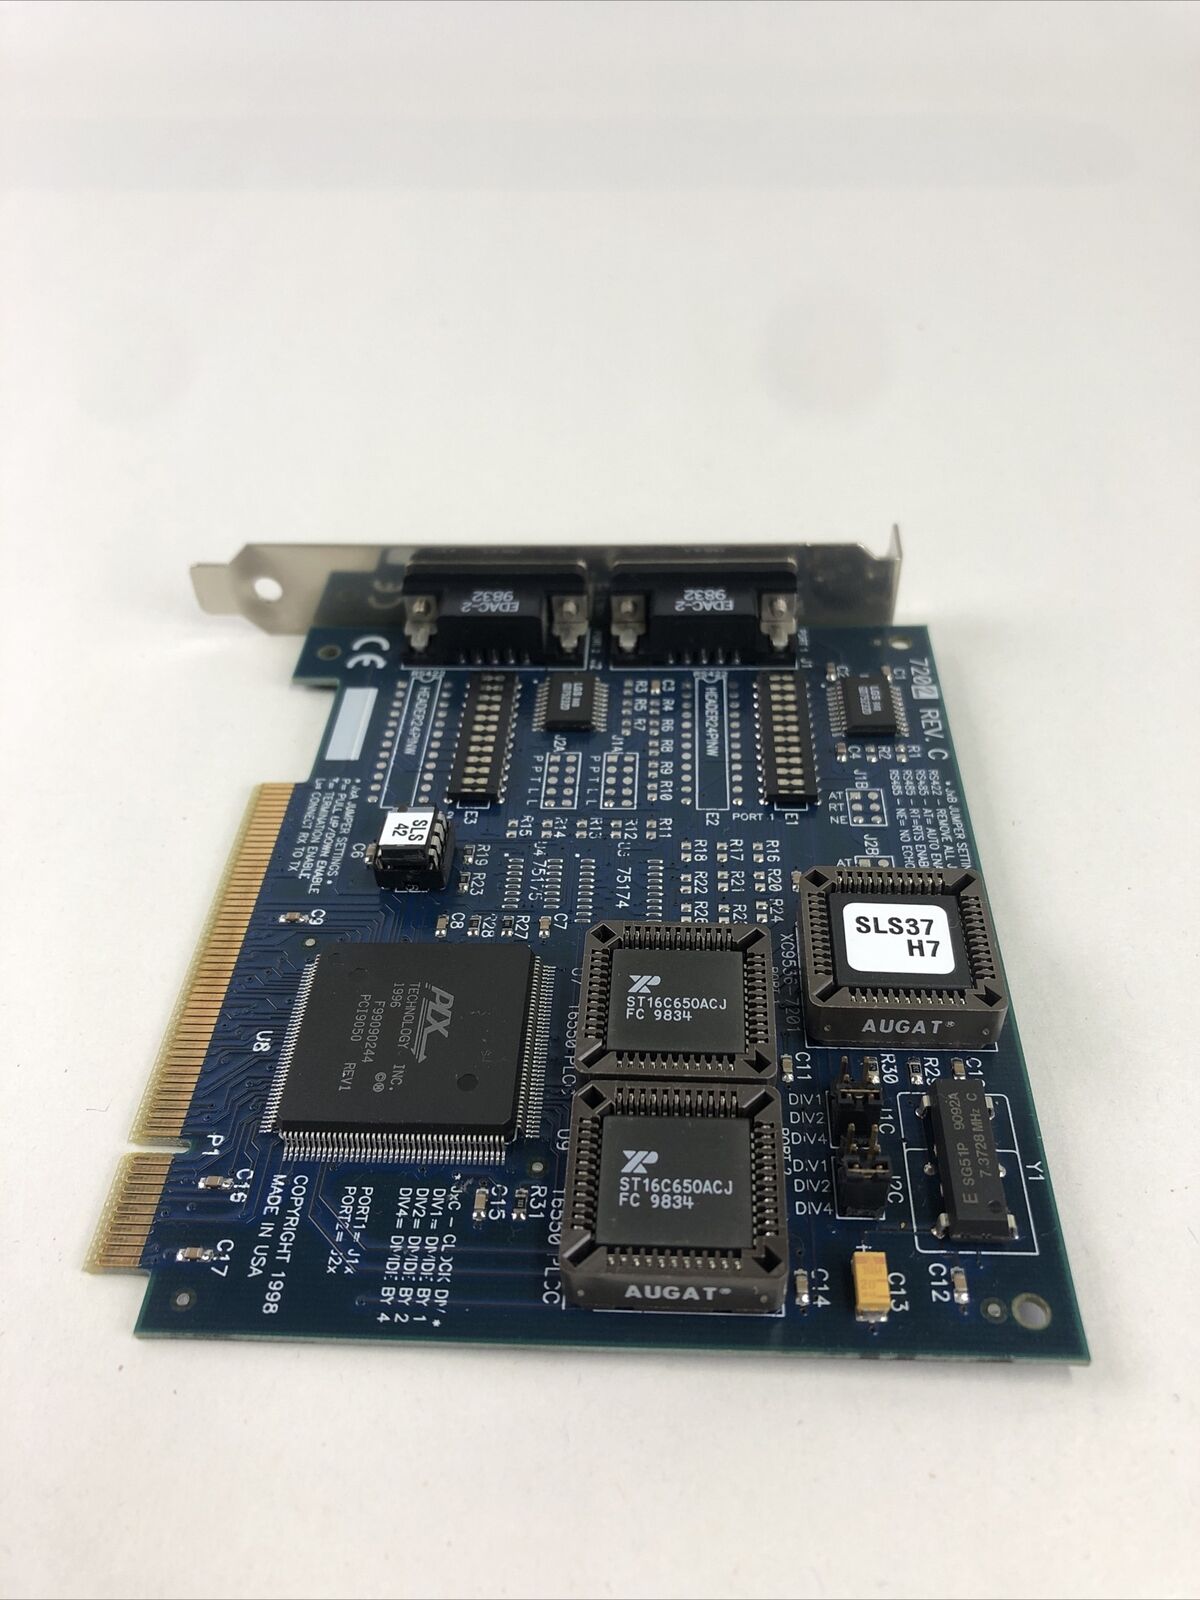 Black Box IC140C-R2 Used Circuit Board Dual Port Serial RS232 Card